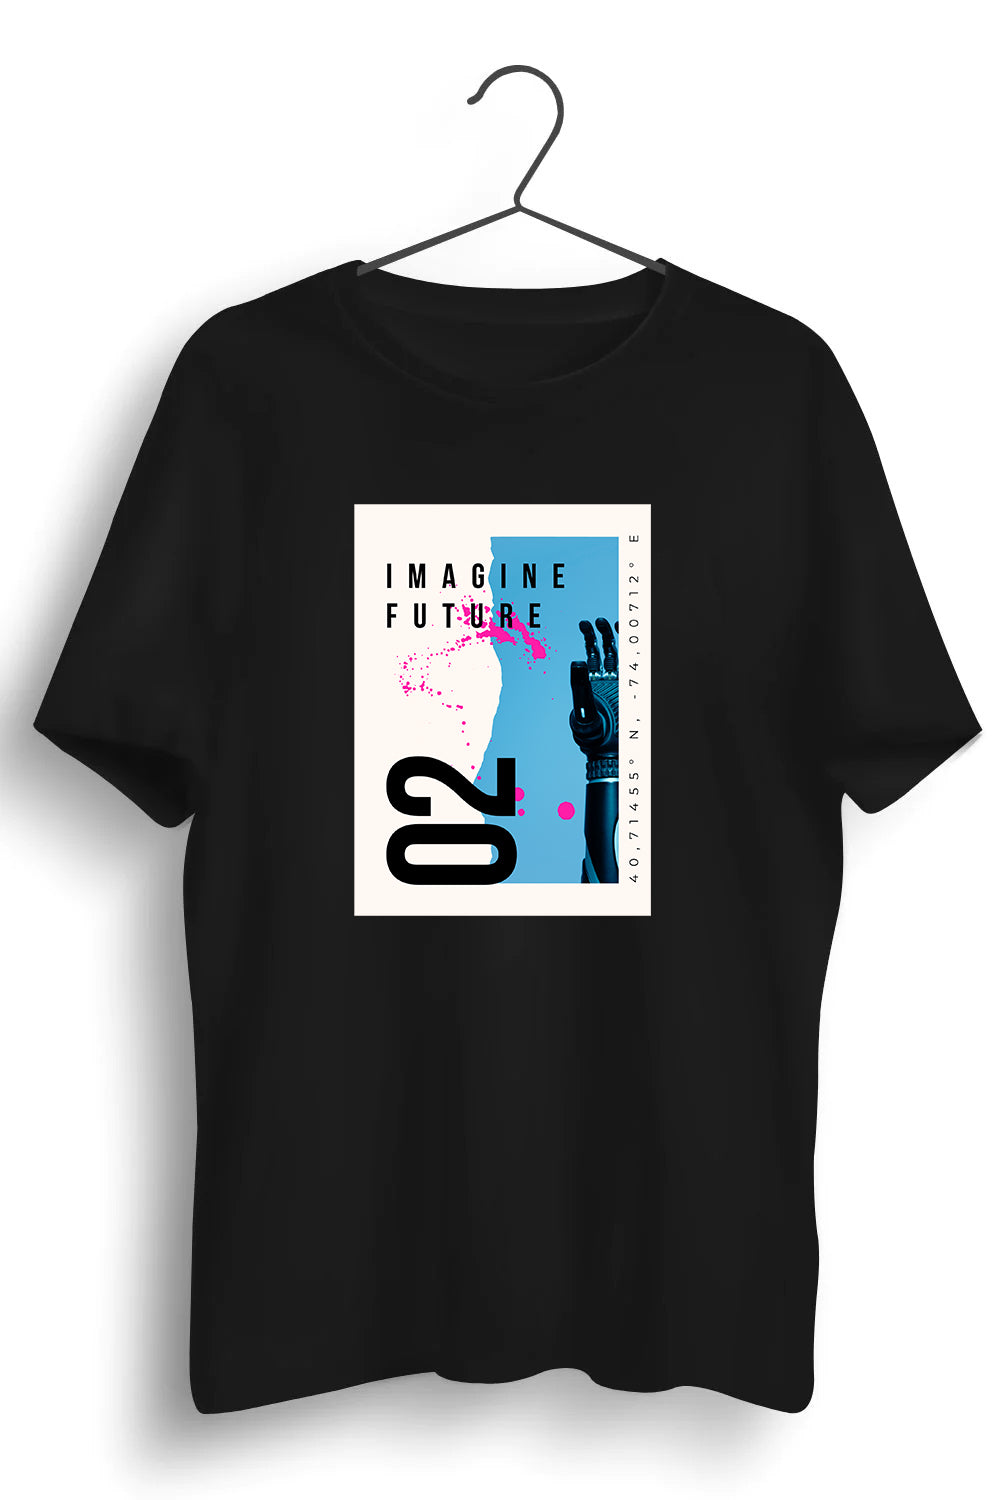 Imagine Future Graphic Printed Black Tshirt